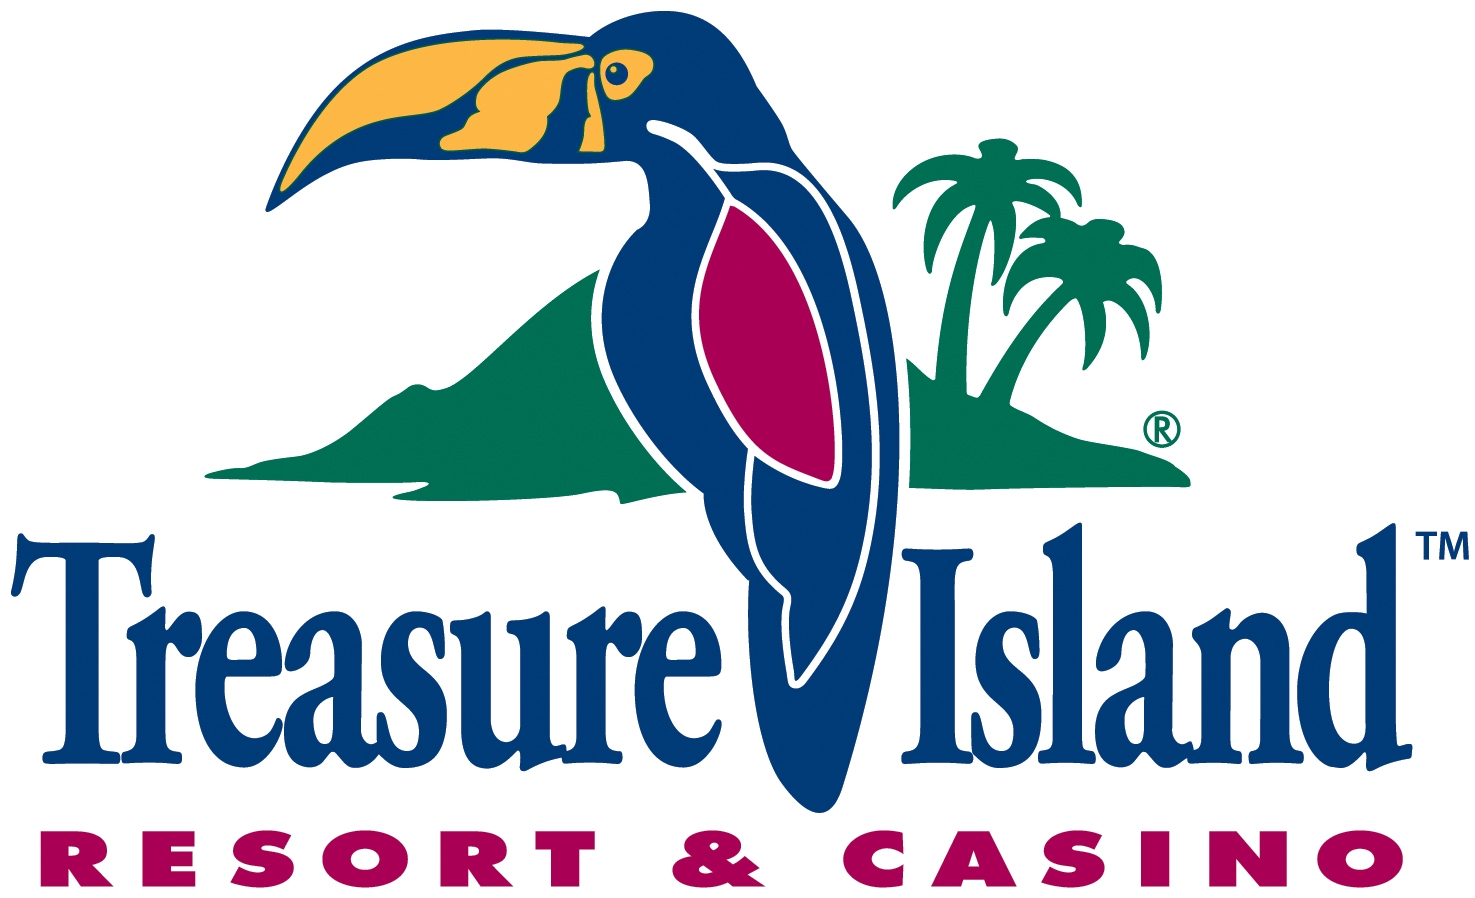 Treasure Island Logo